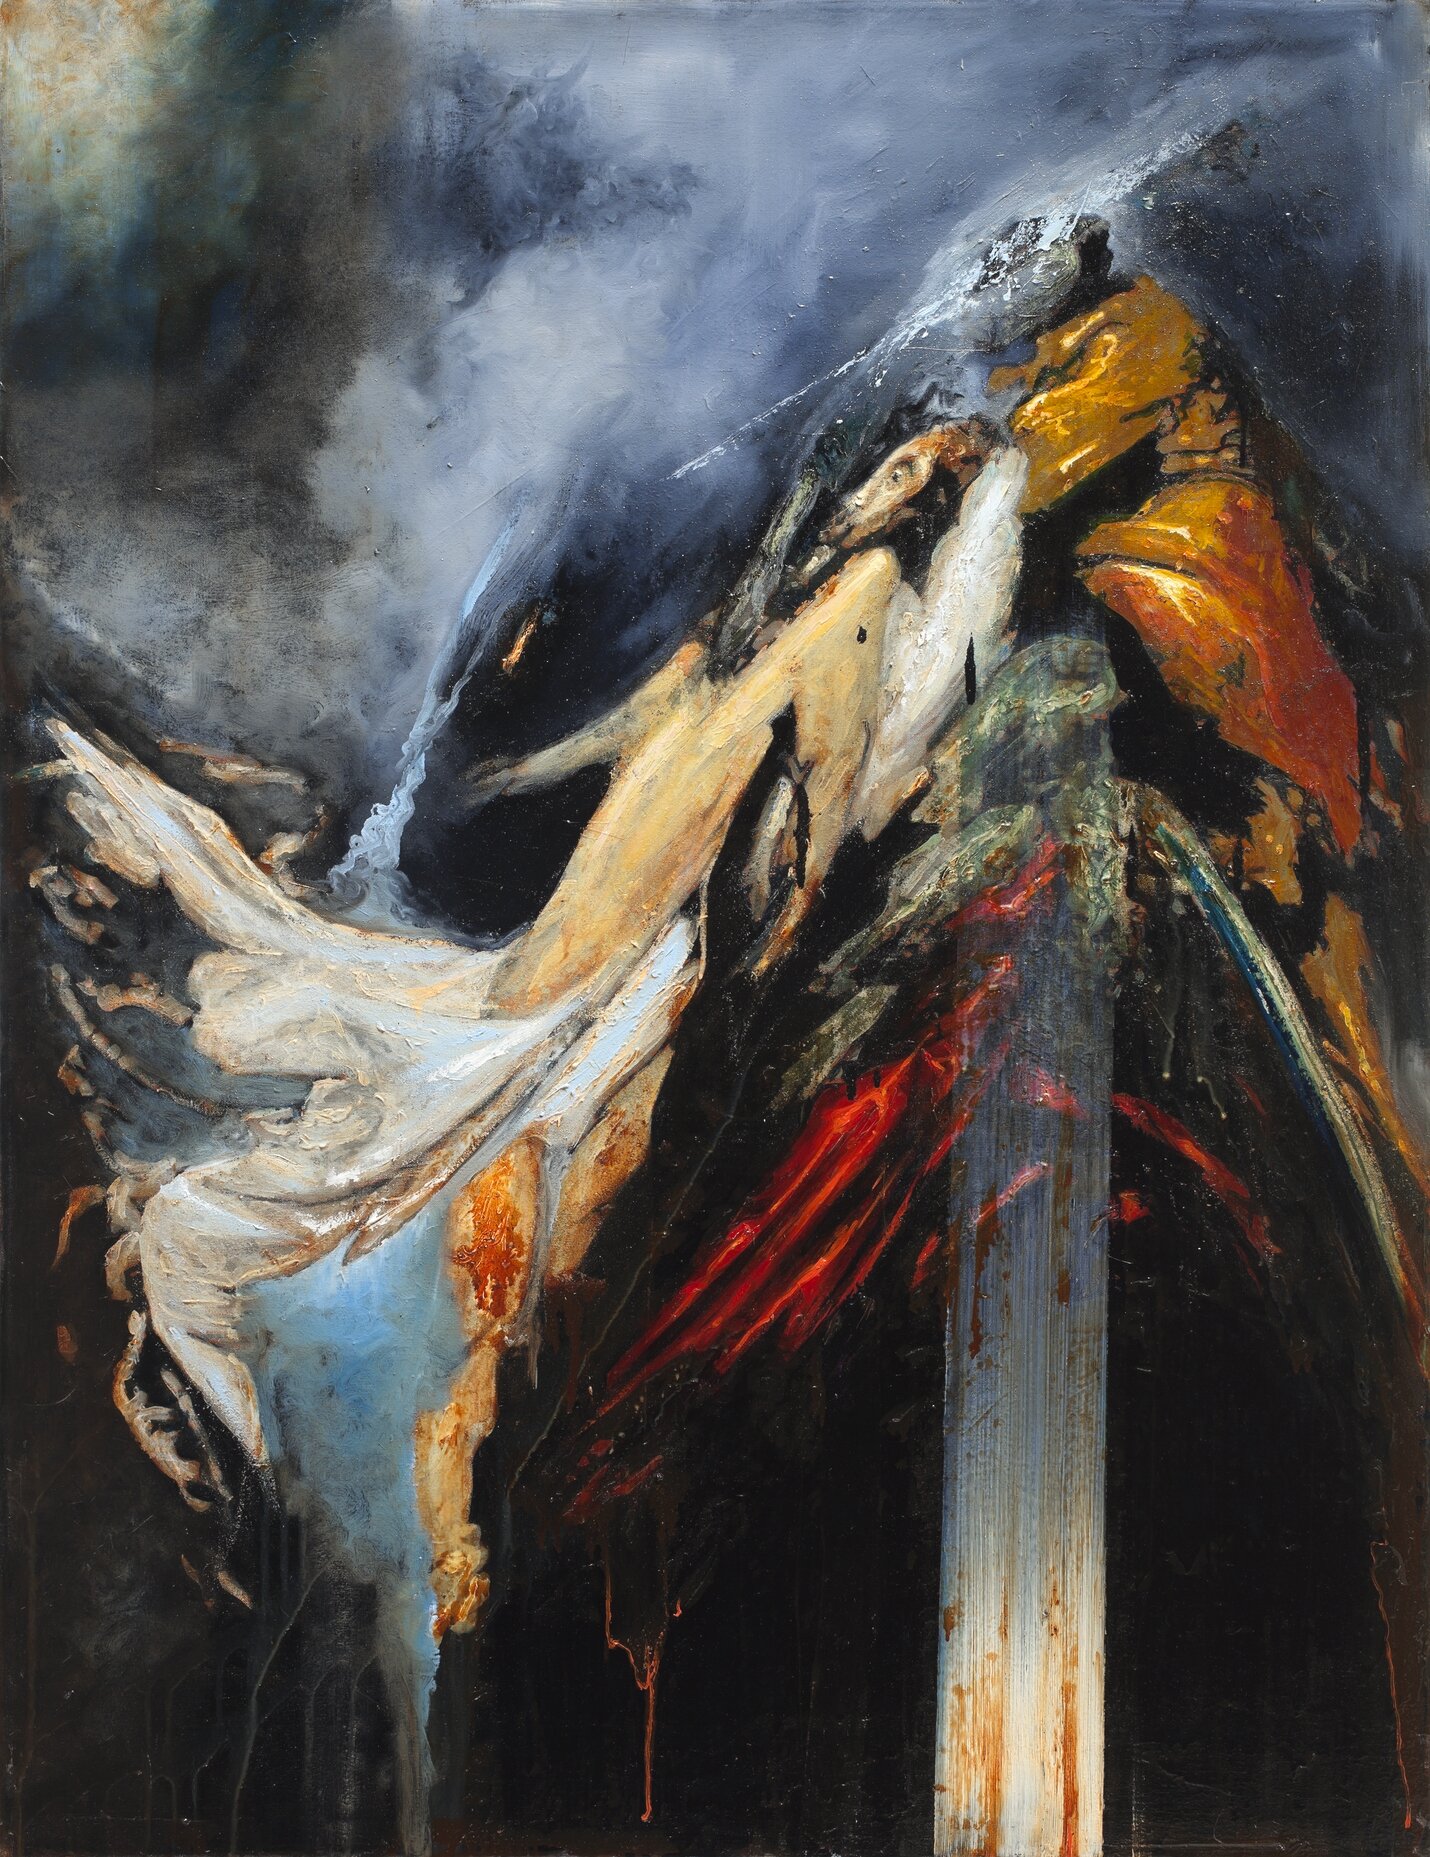 Deposition (2012) oil on canvas, 130x80 cm